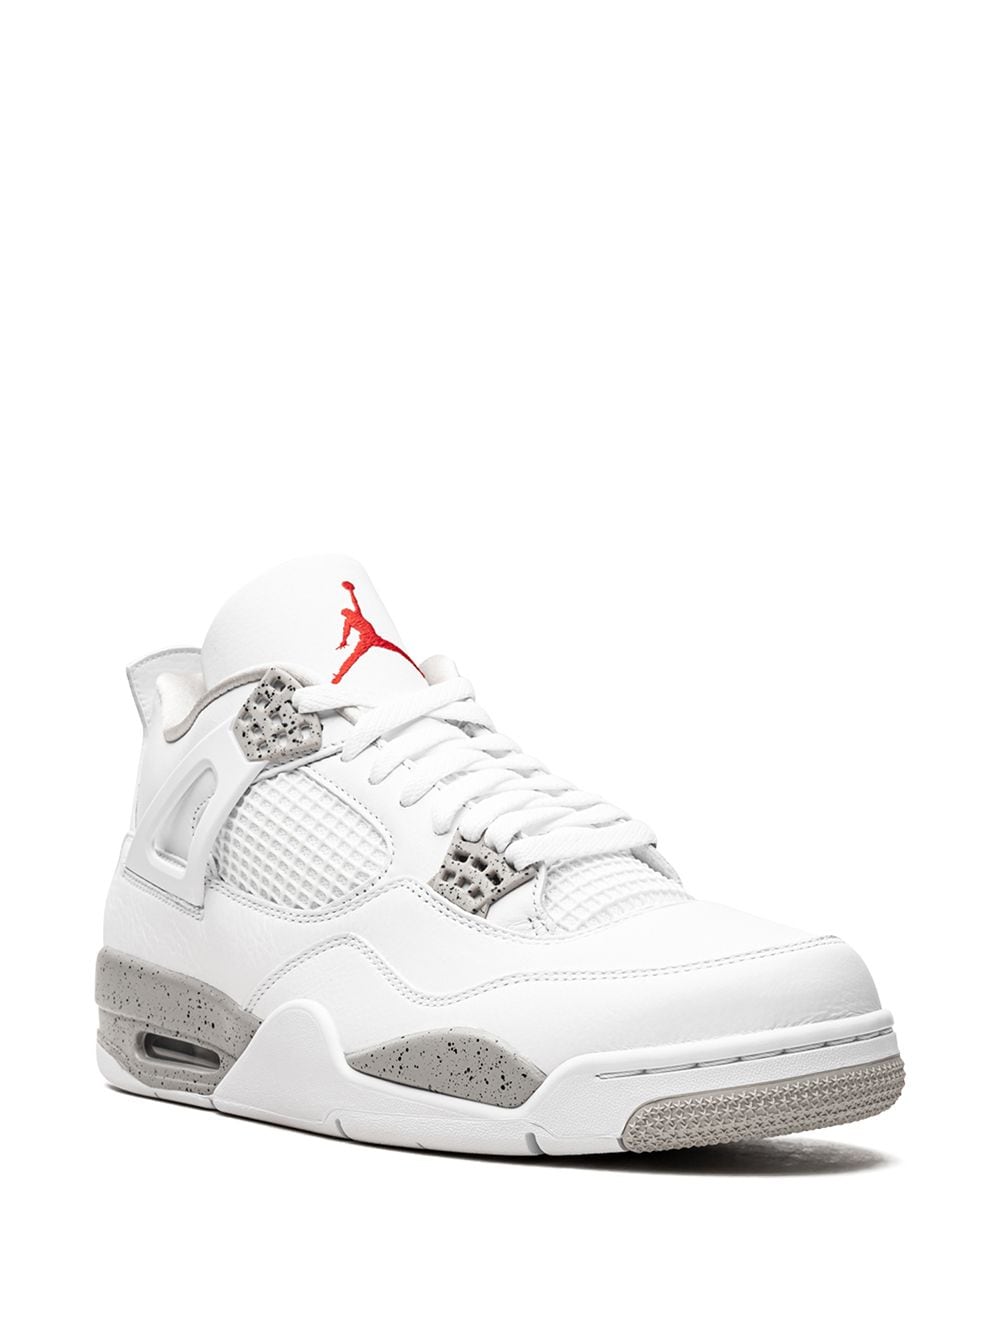 Giày Nike Air Jordan 4 White Oreo Rep 1:1